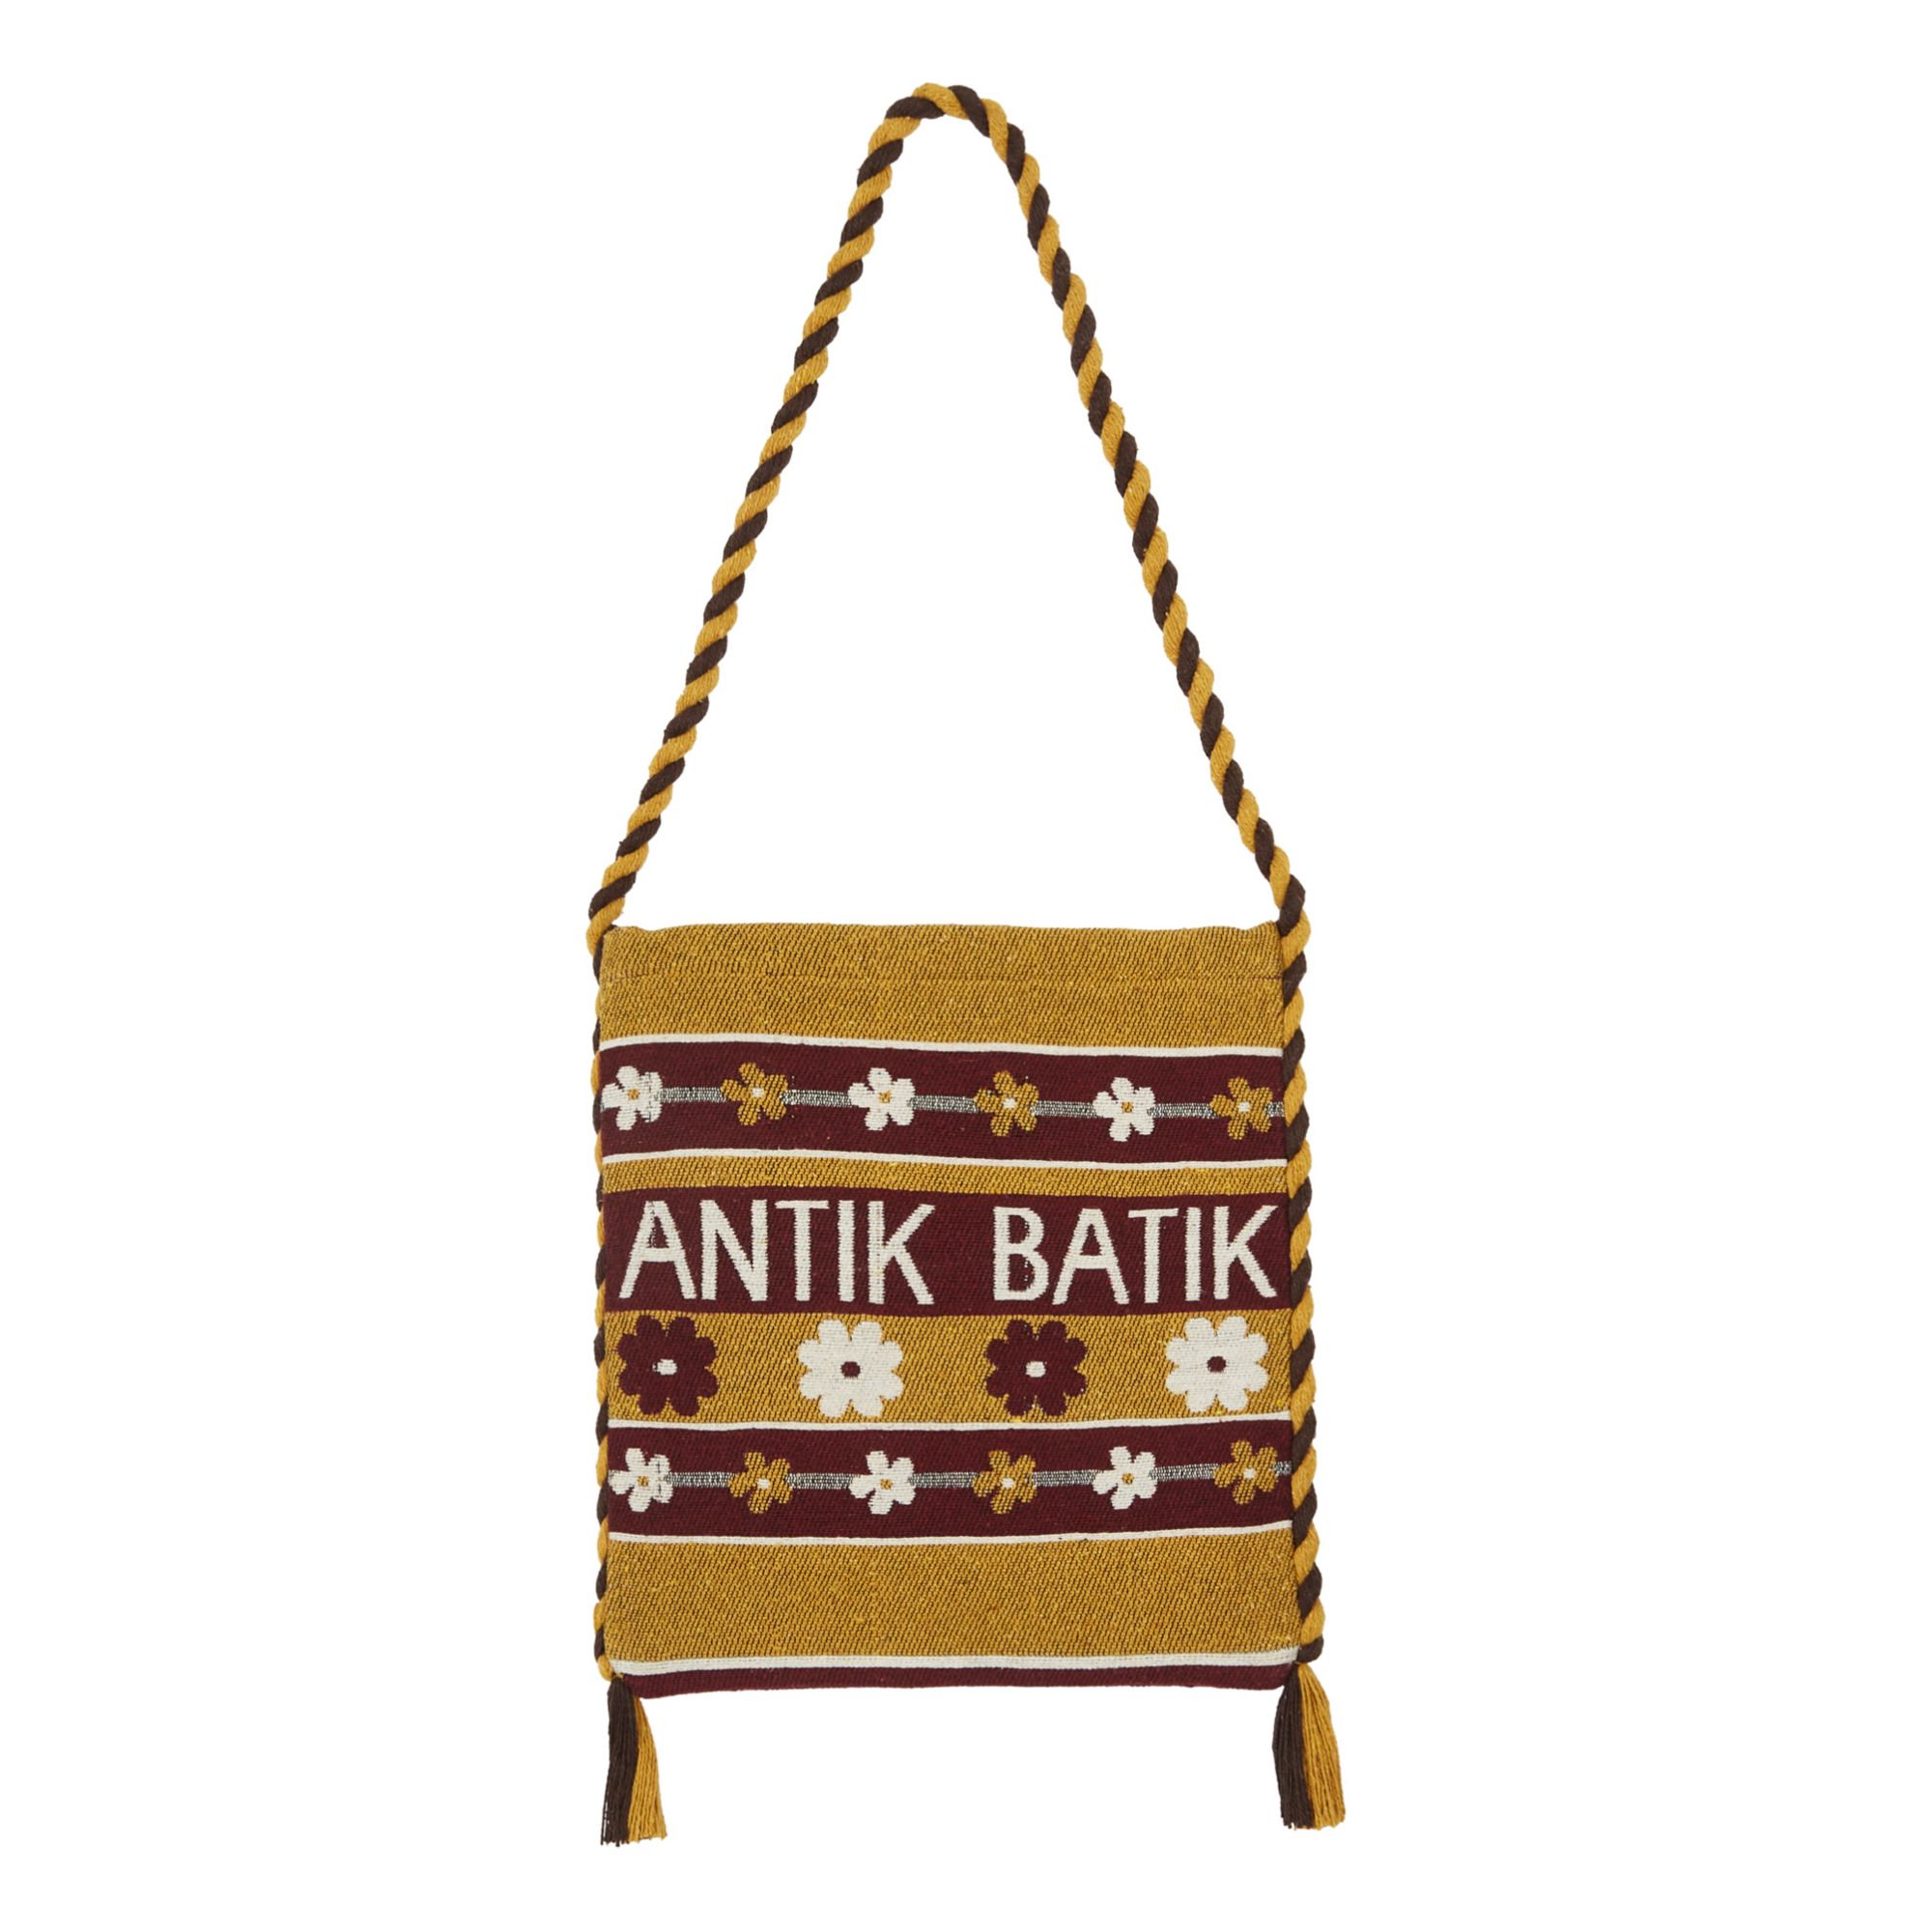 Antik Batik - Sac Mate Antik Batik - Femme - Rouille